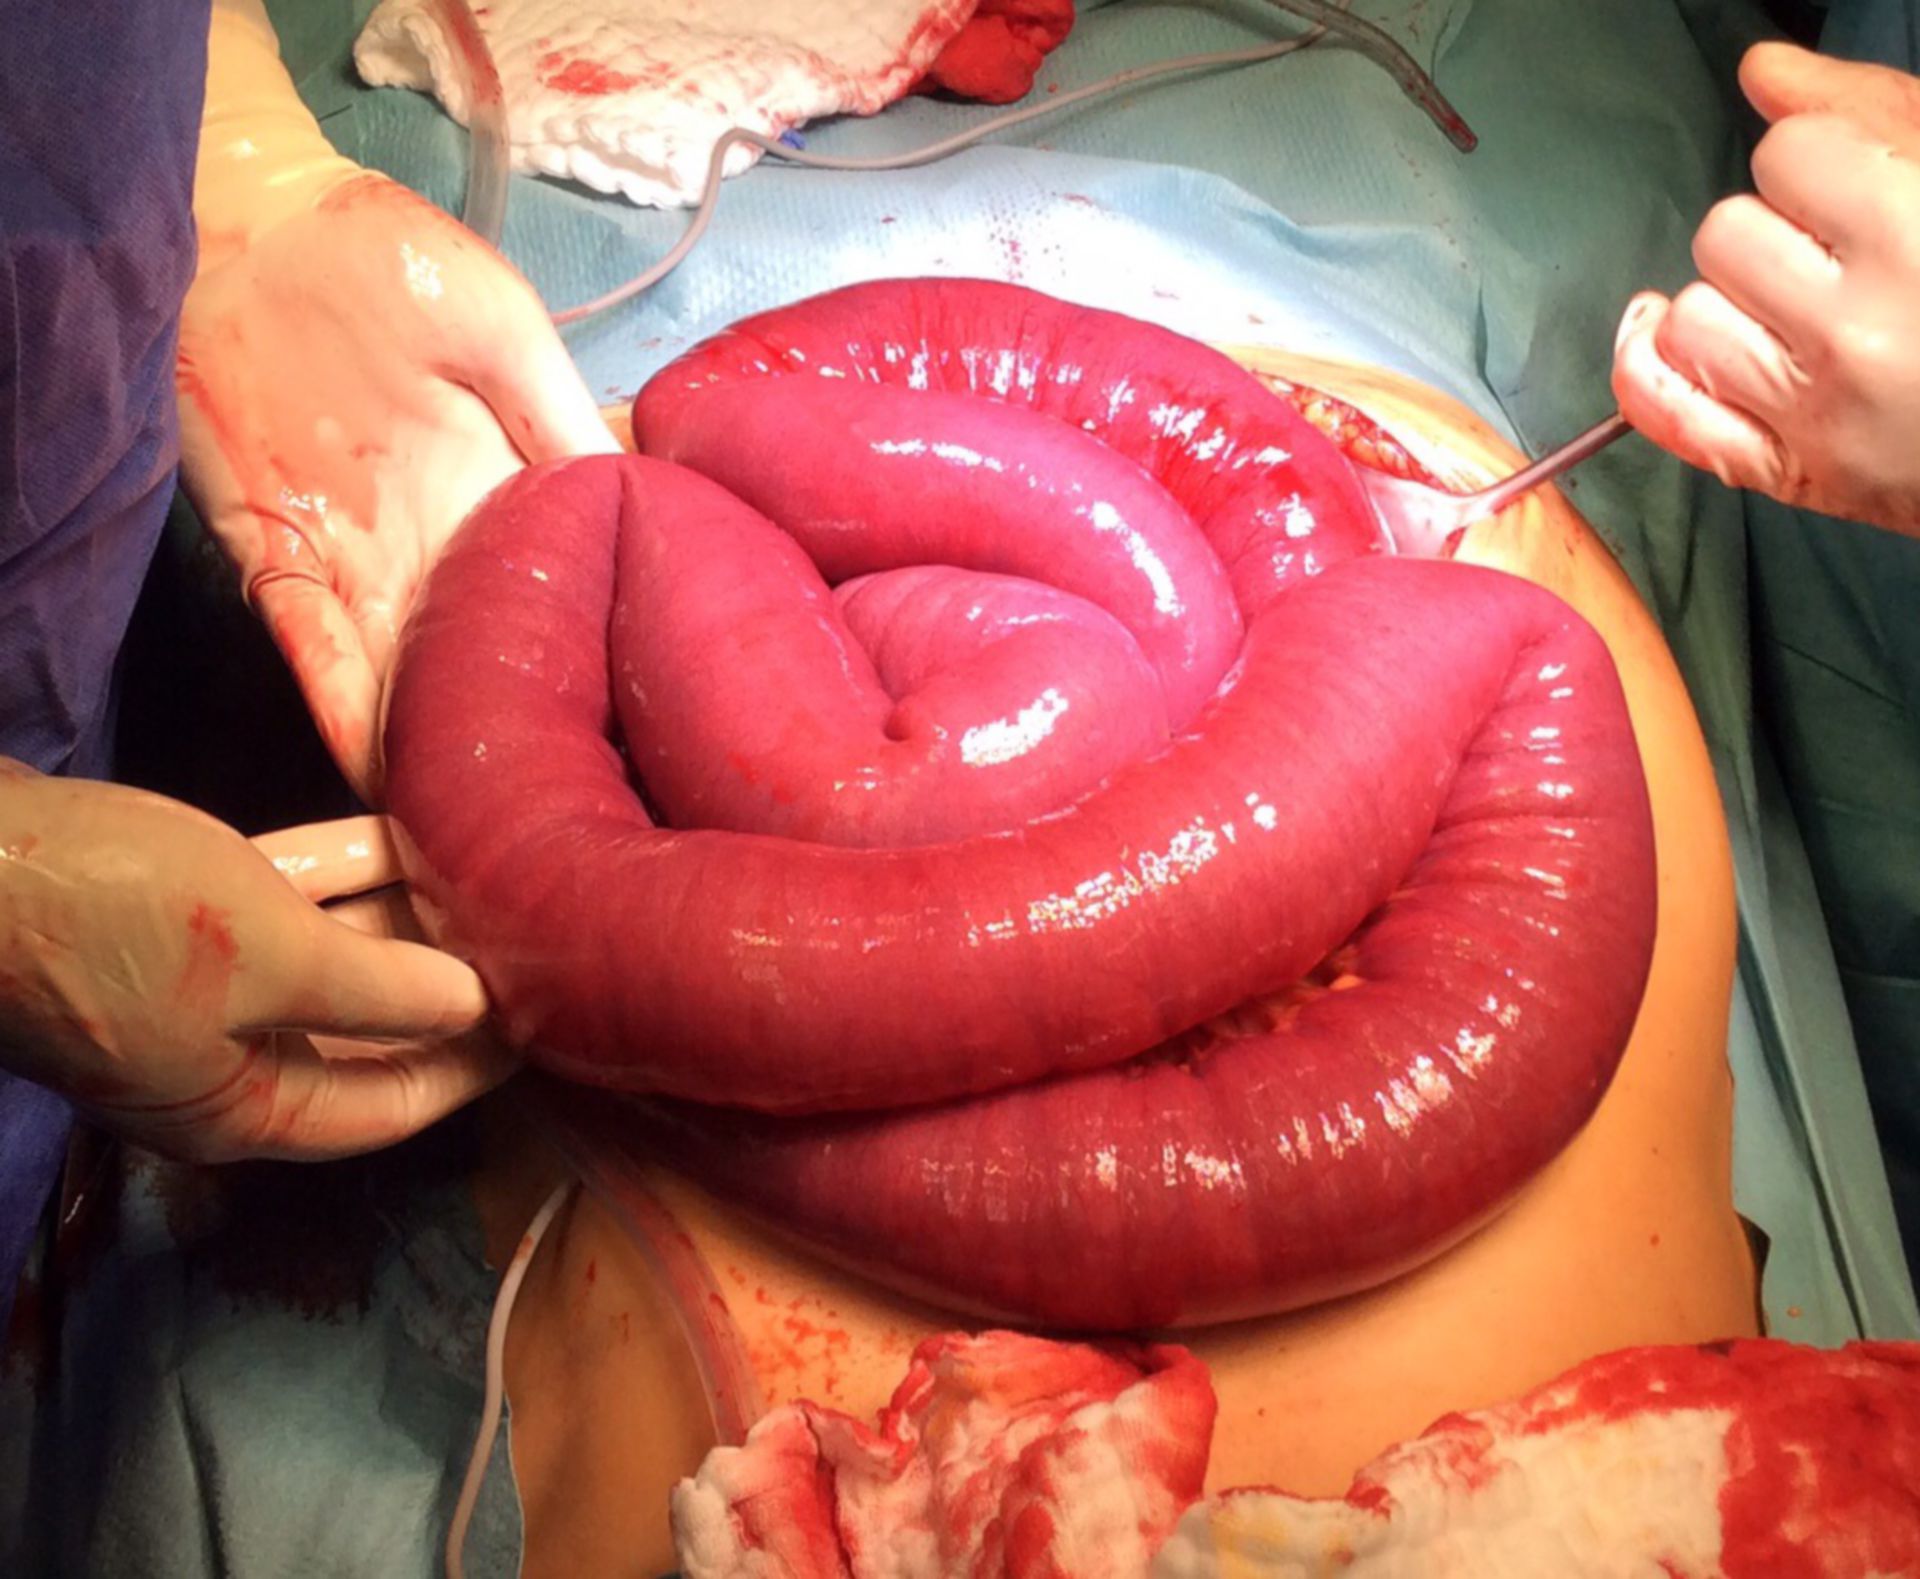 Ileus of the small intestine due to perforated appendicitis